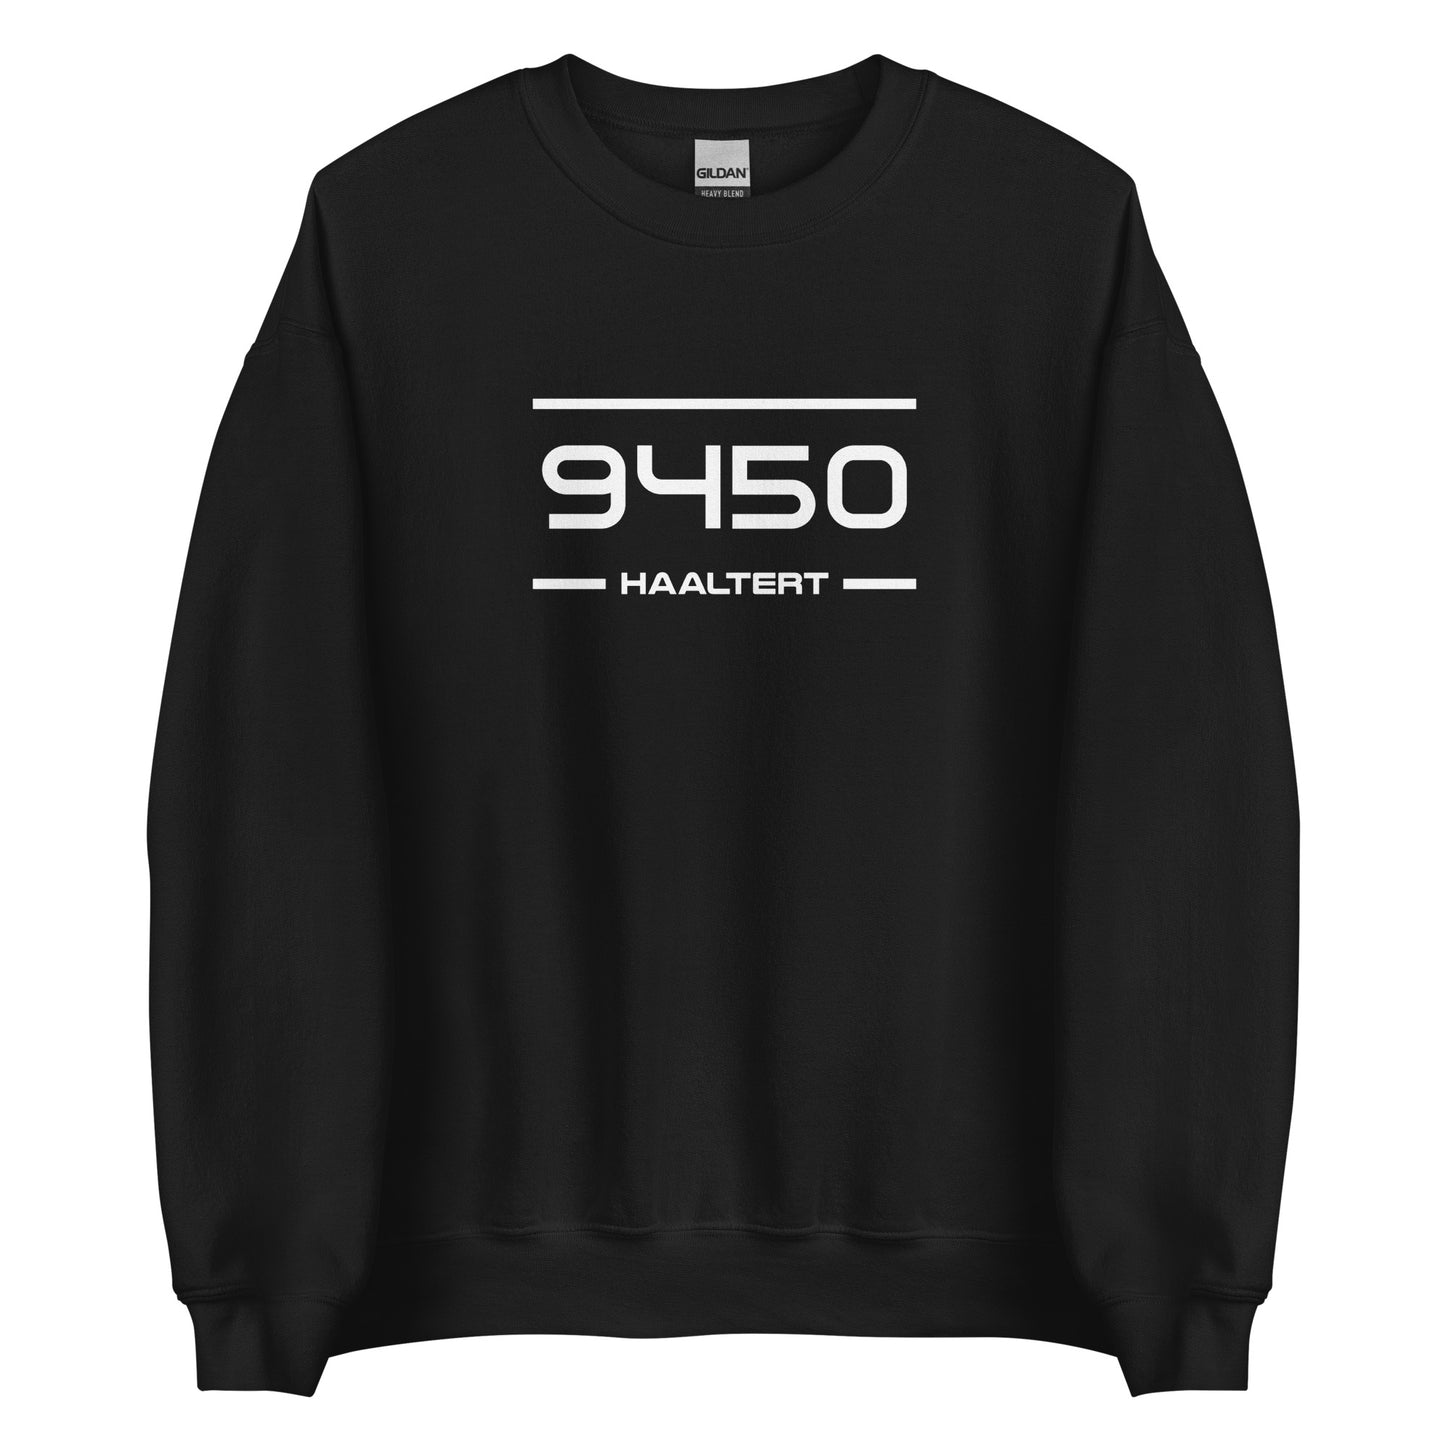 Sweater - 9450 - Haaltert (M/V)